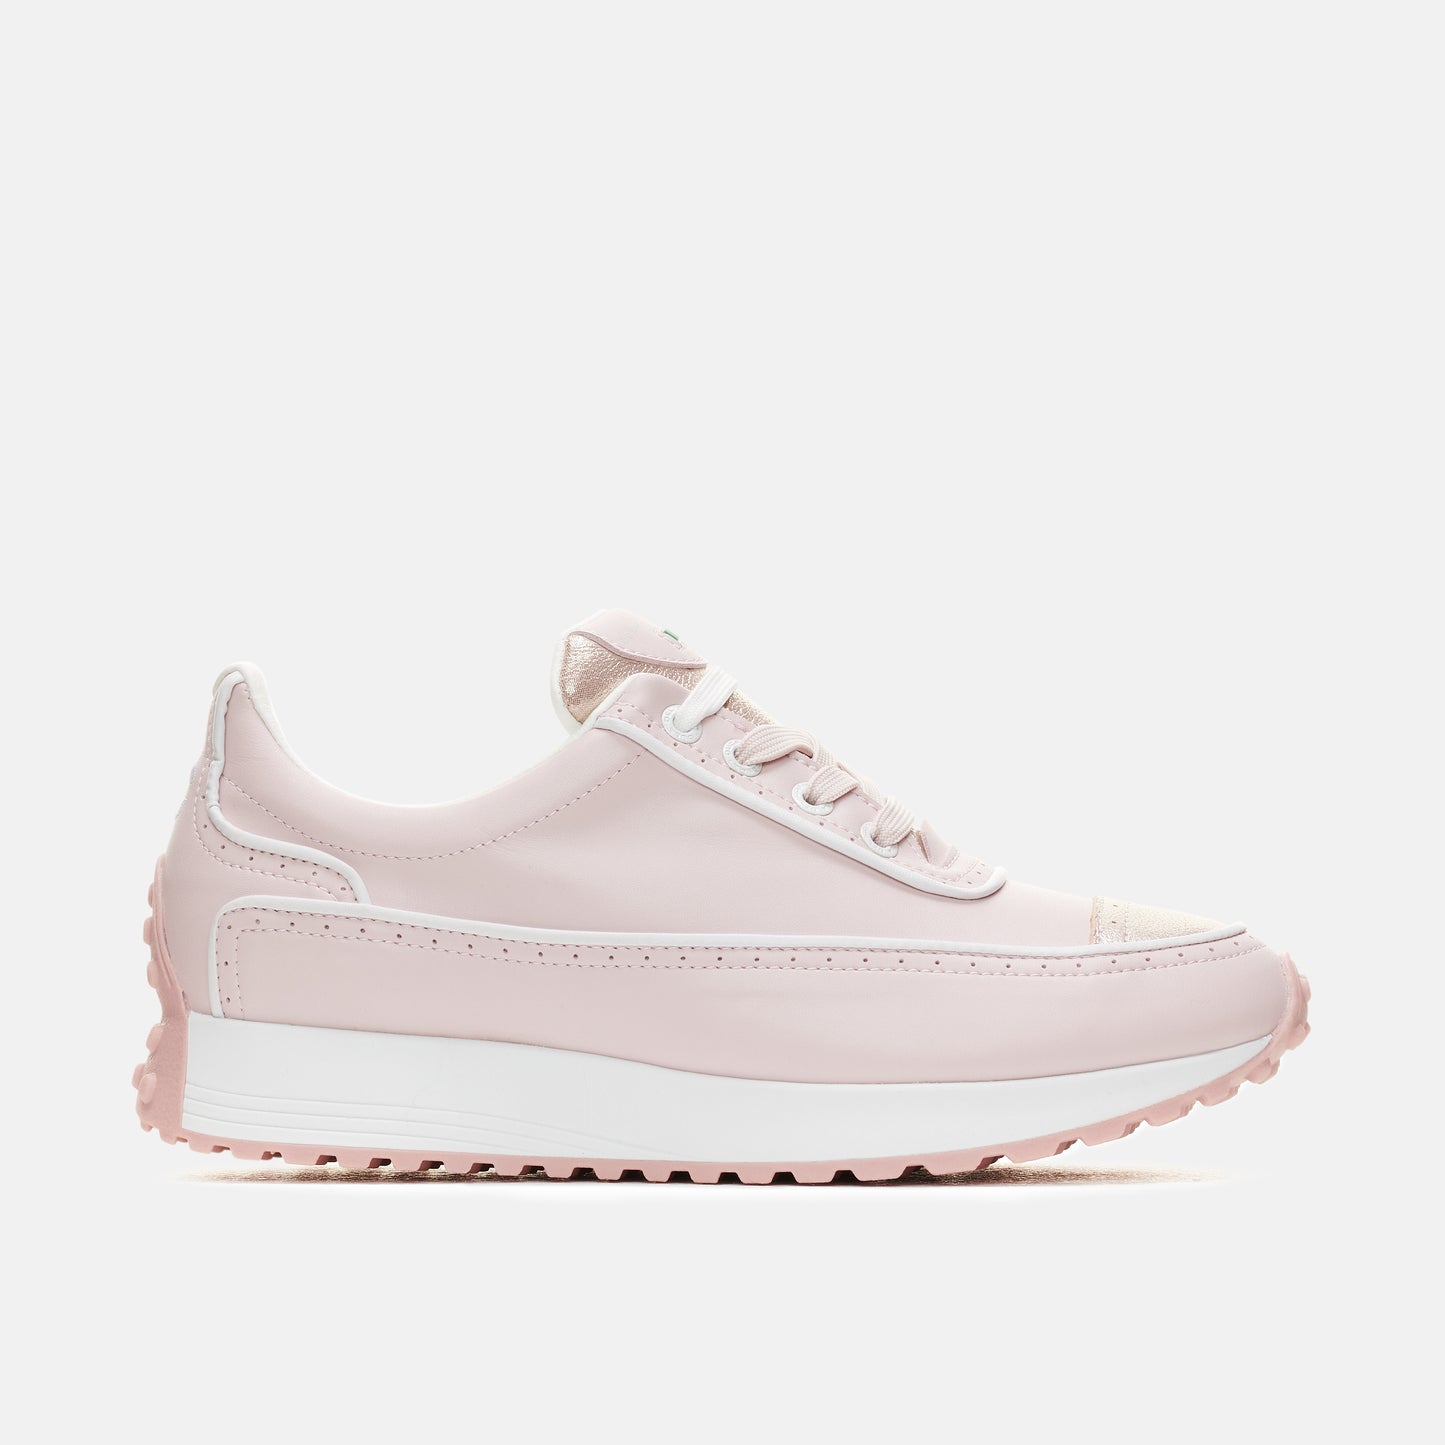 Alexa - pink Women's Golf Shoes Duca del Cosma Waterproof best golf shoe for the golf course